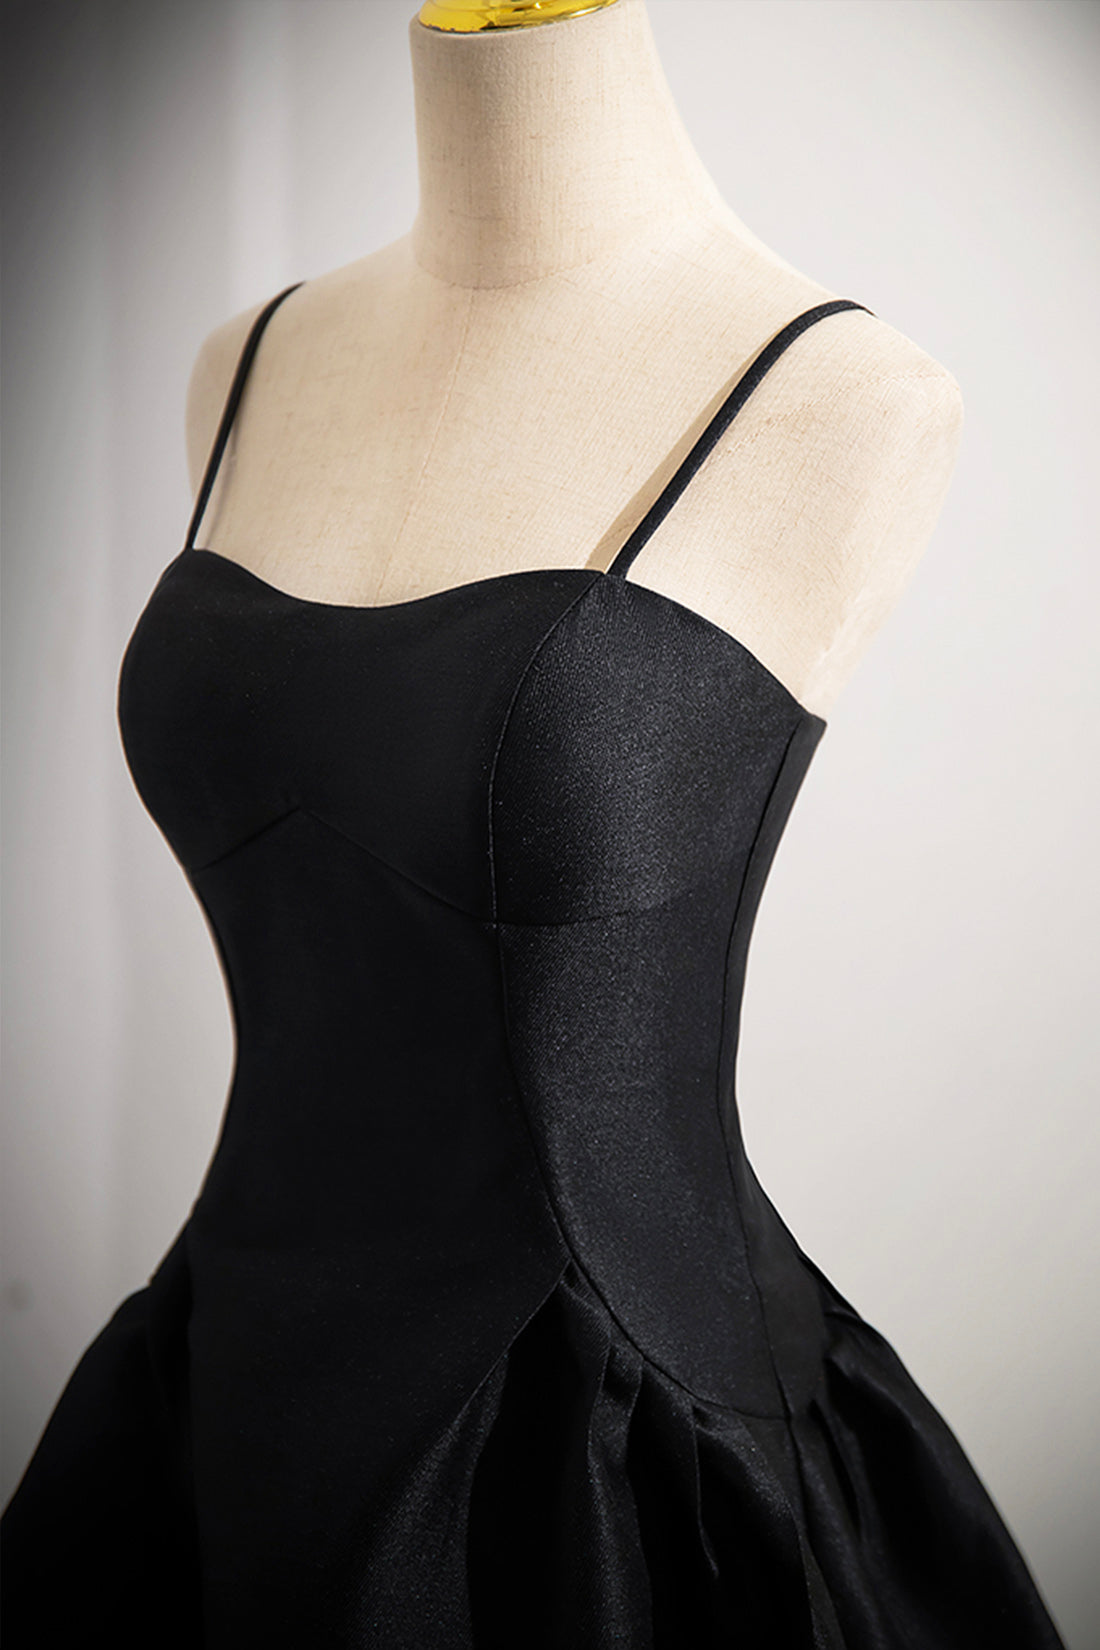 Black Spaghetti Strap  Satin Short Prom Dress, Simple A-Line Homecoming Party Dress